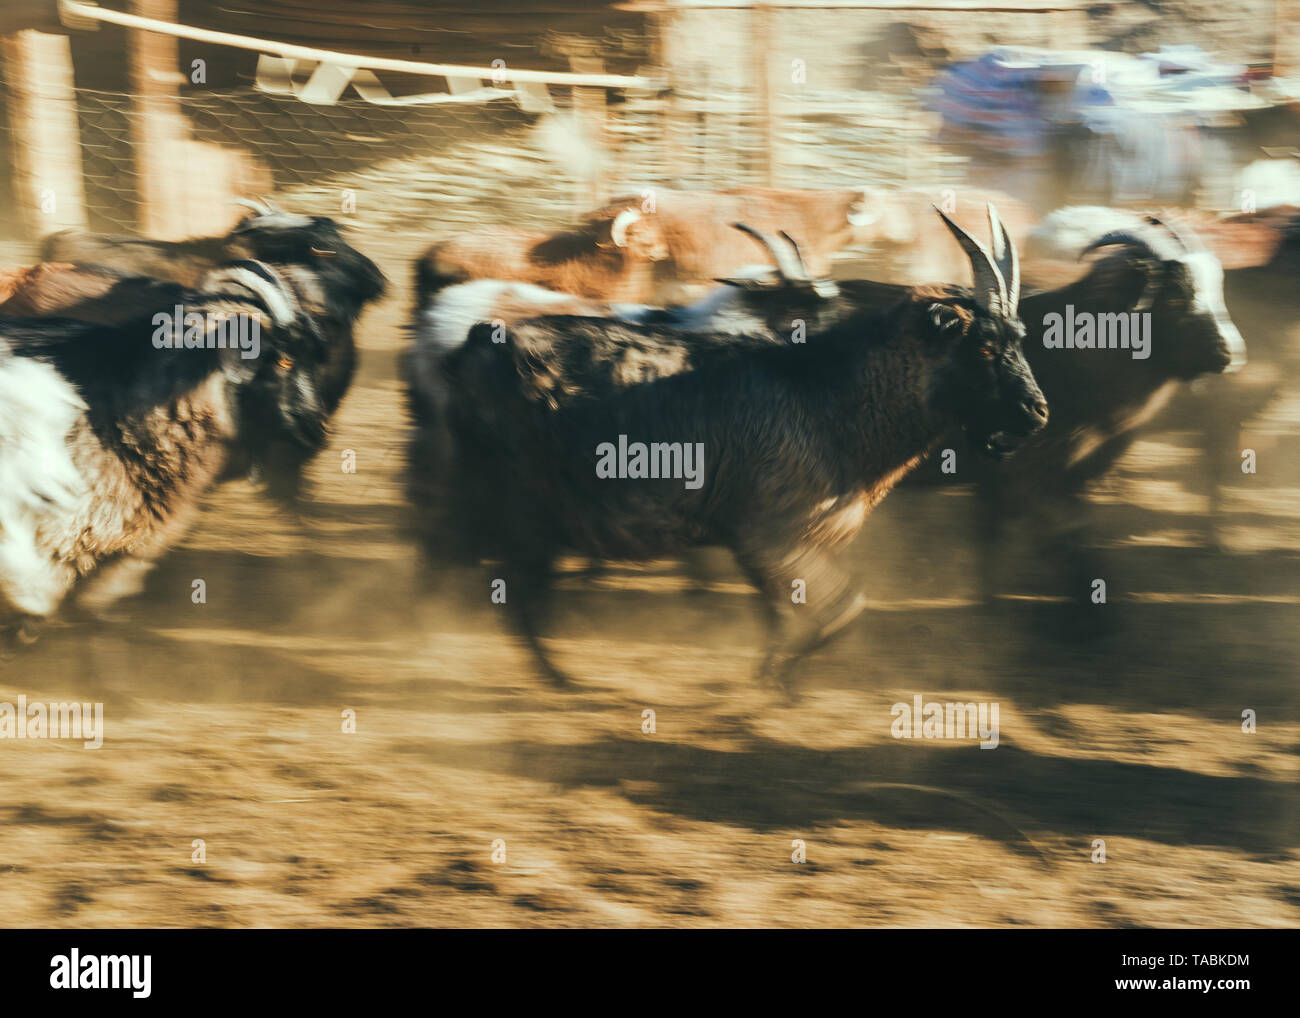 Blurred view of Mongolian cattle running through street. Stock Photo